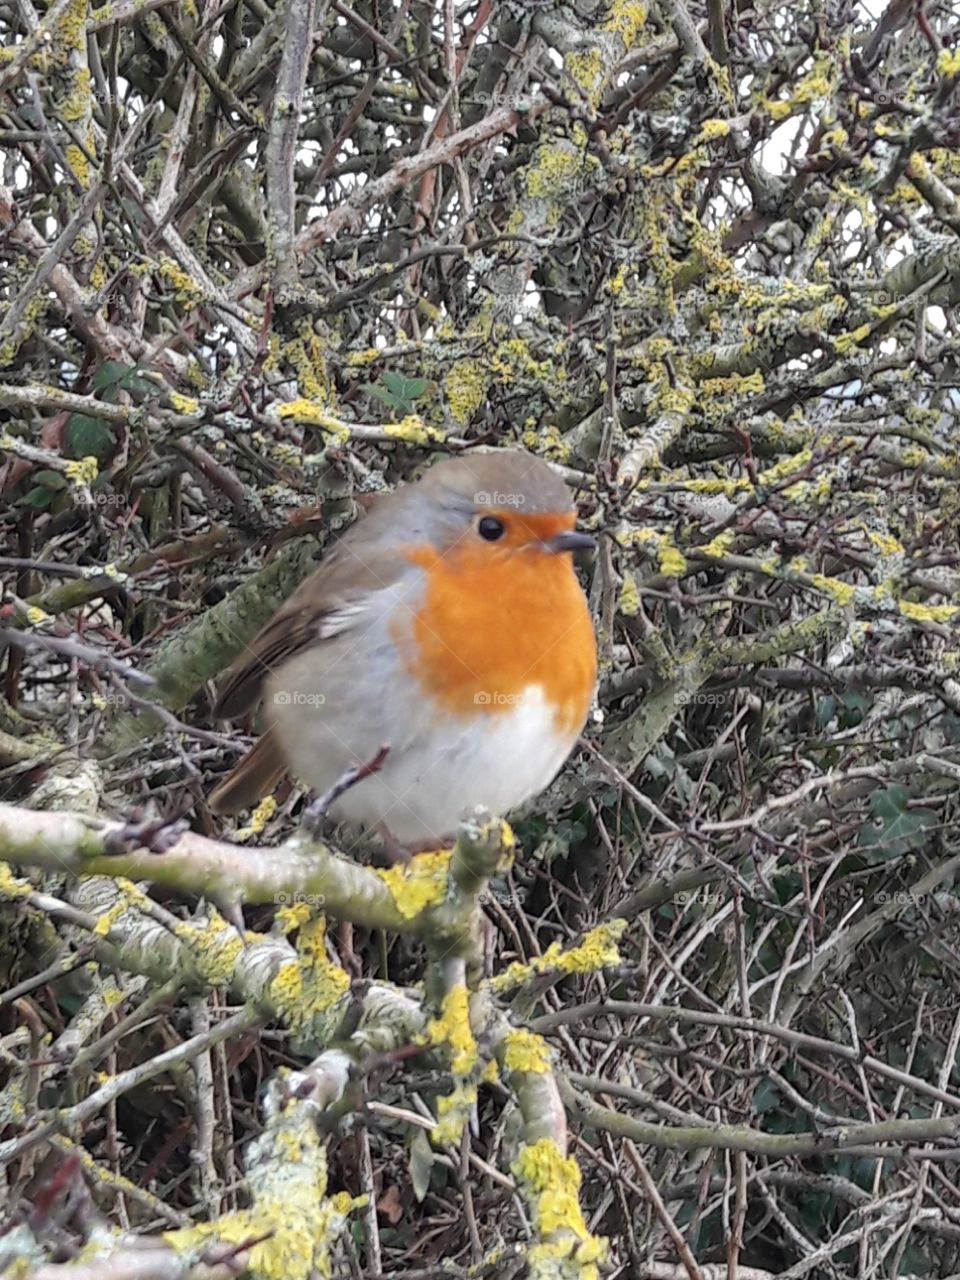 A rather plump little Robin